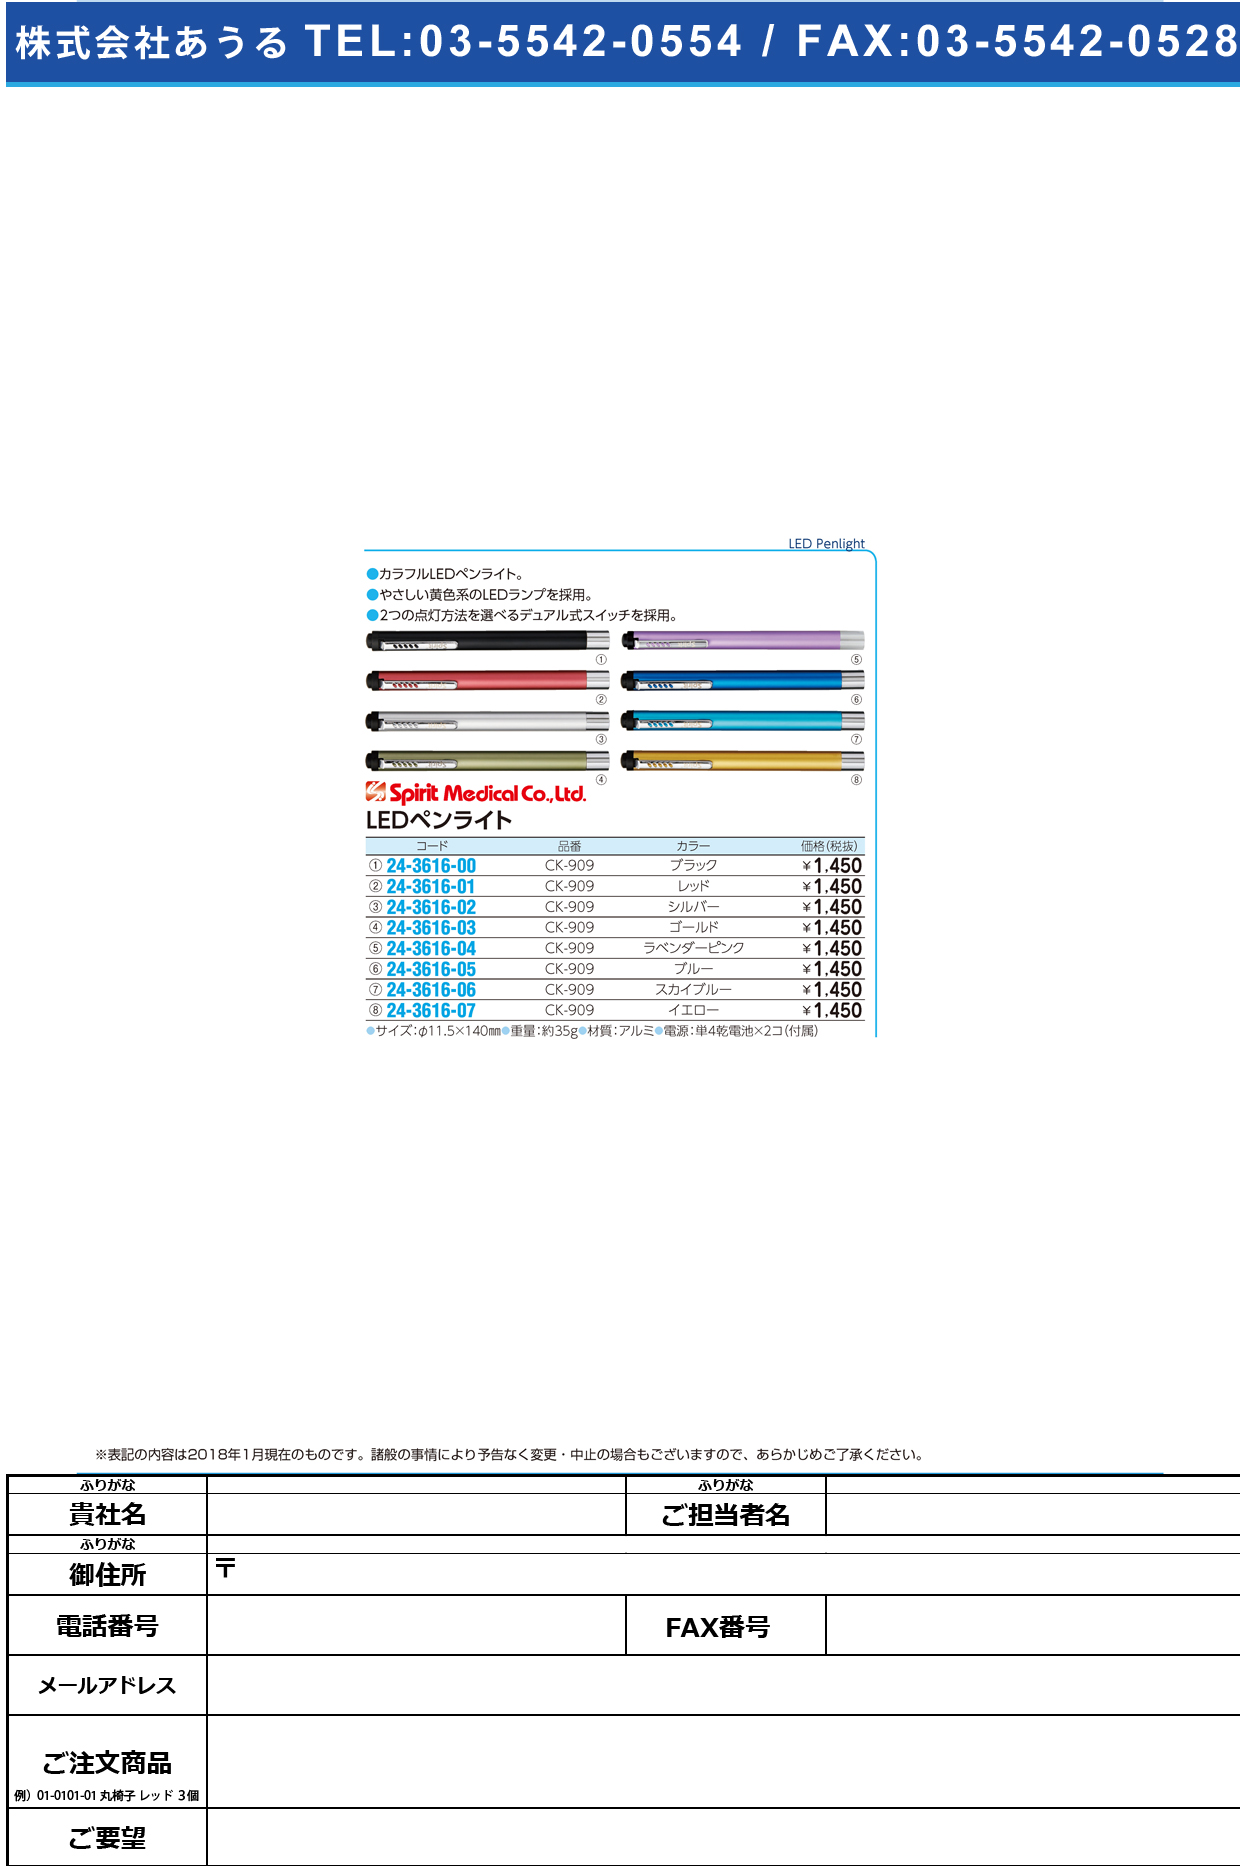 (24-3616-04)ＳｐｉｒｉｔＬＥＤペンライト CK-909(ﾋﾟﾝｸ) SPIRITLEDﾍﾟﾝﾗｲﾄ(スピリット・メディカル社)【1台単位】【2019年カタログ商品】